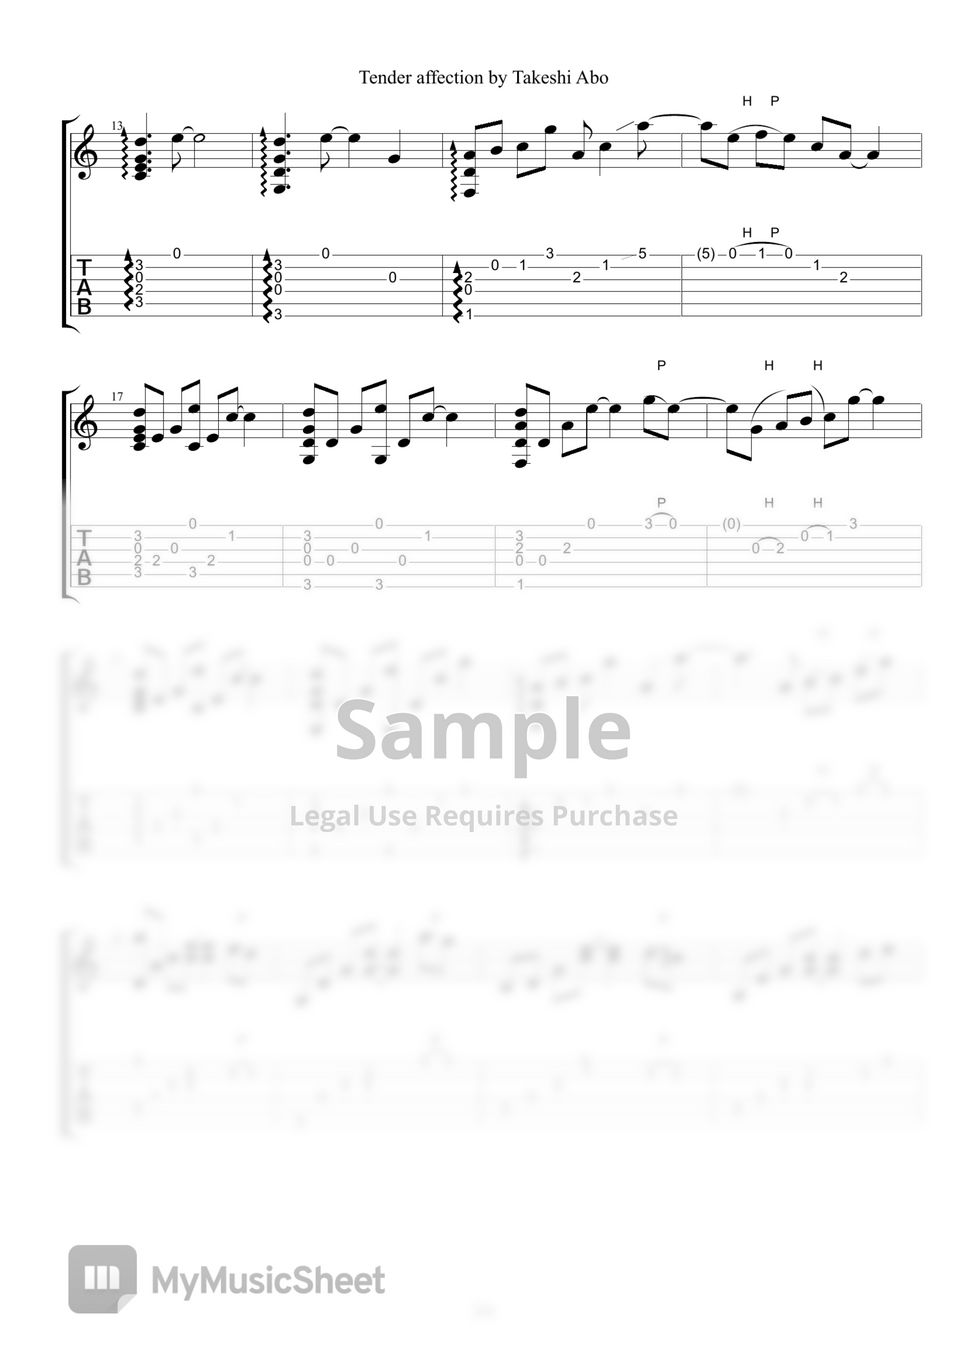 Steins Gate - Tender affection (Guitar TAB) by guitar kuitar